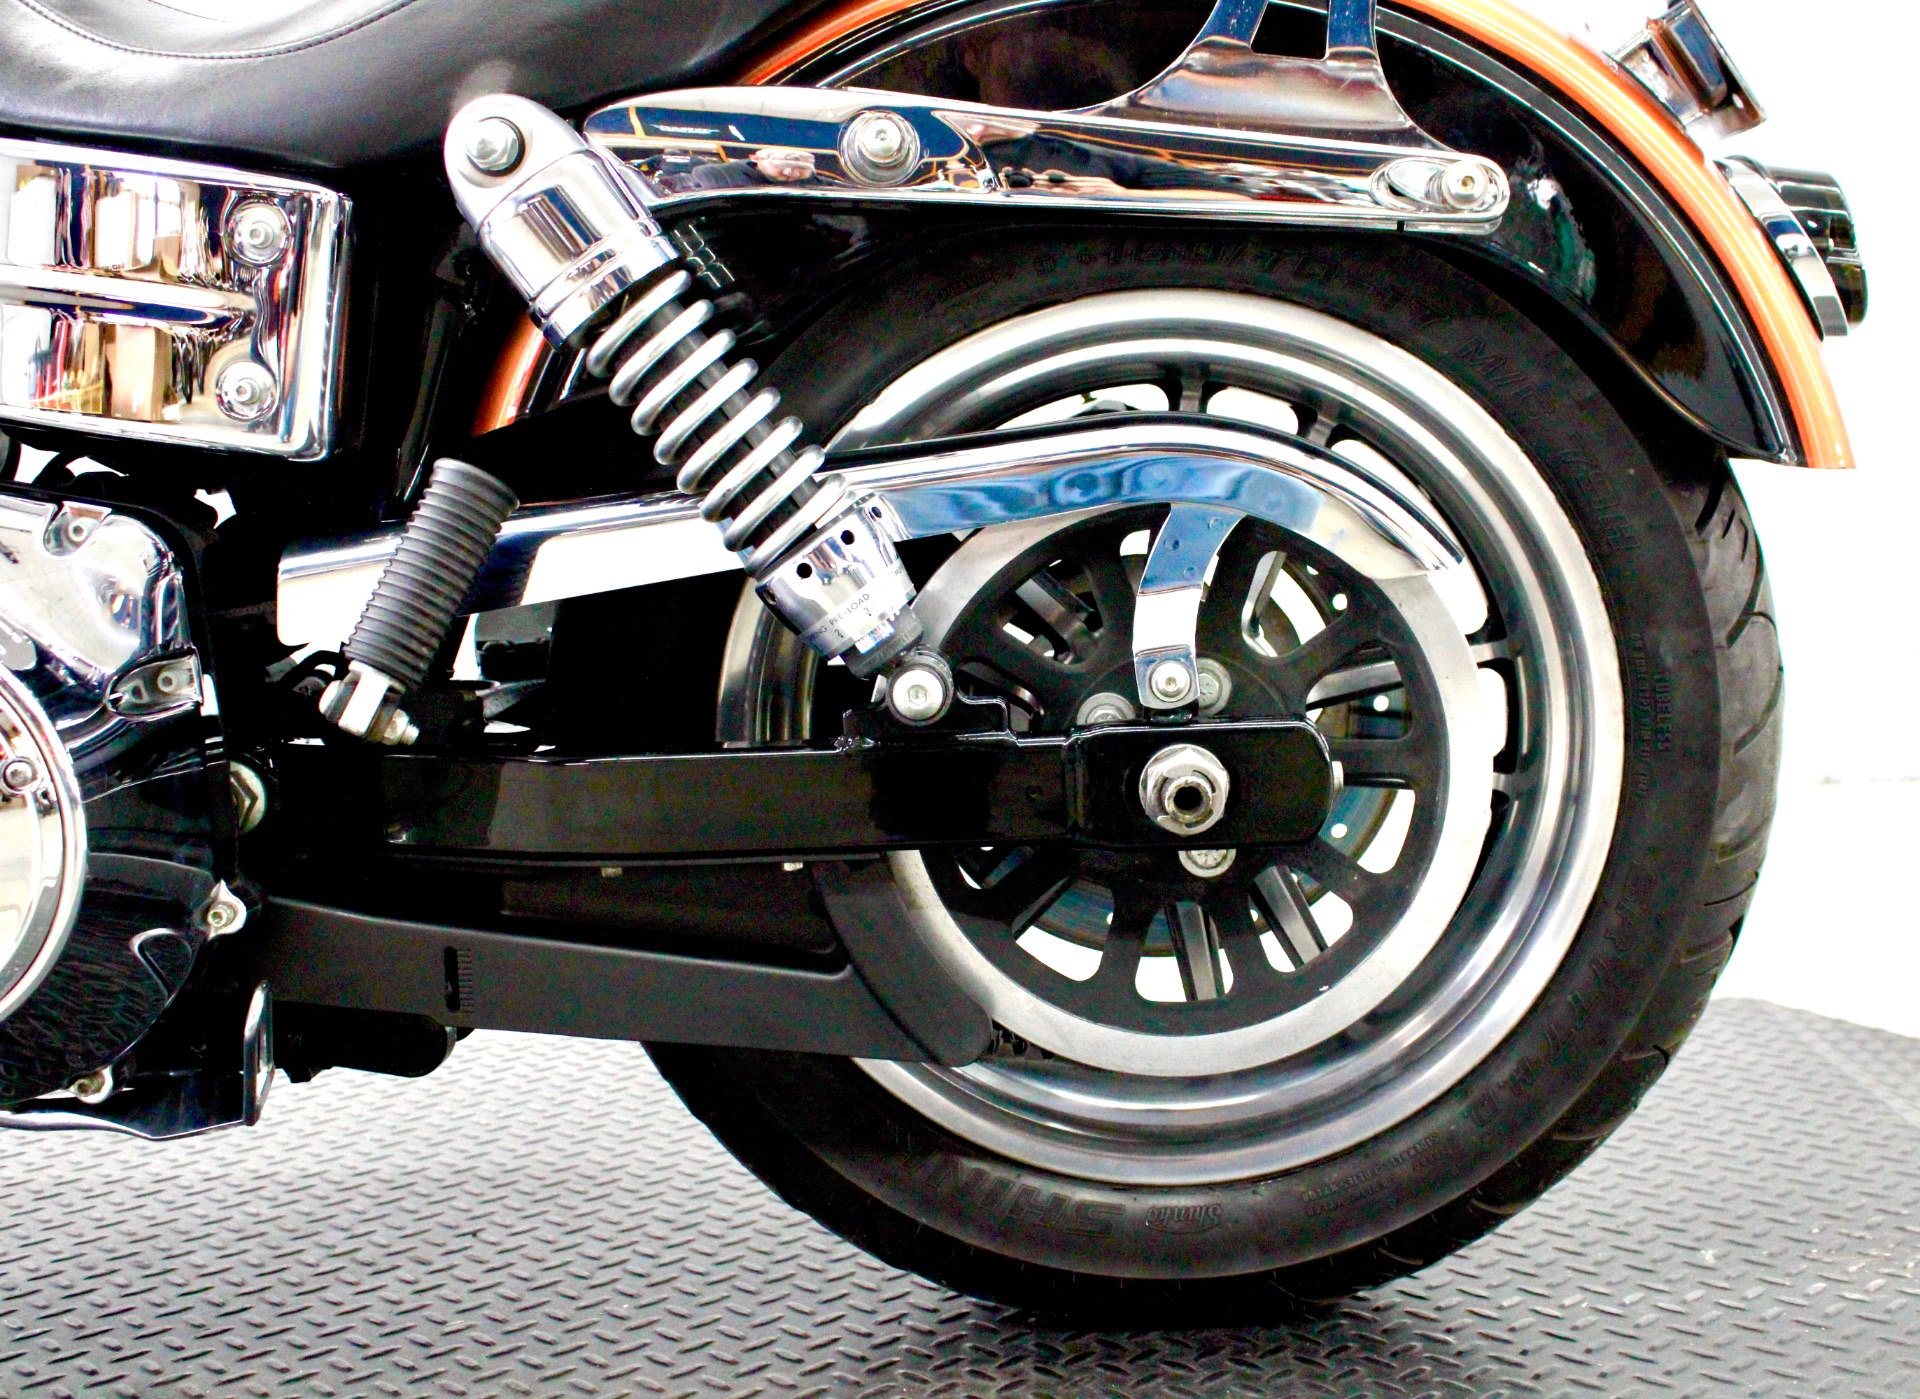 2008 Harley-Davidson Dyna® Low Rider® in Fredericksburg, Virginia - Photo 22